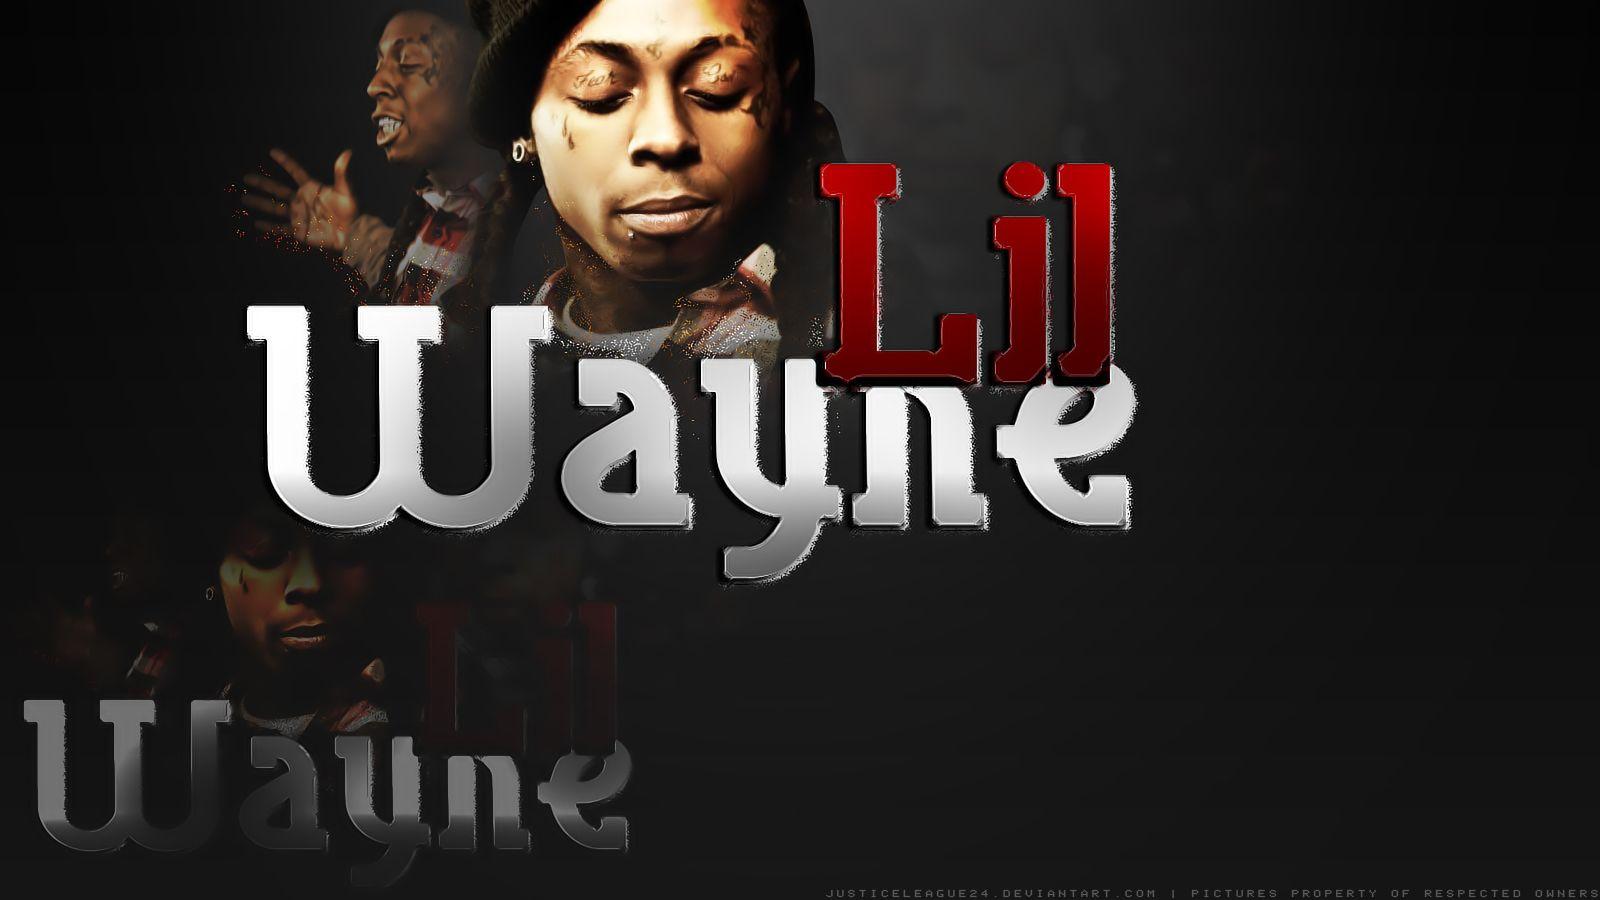 wallpaper: Lil Wayne HD Wallpaper